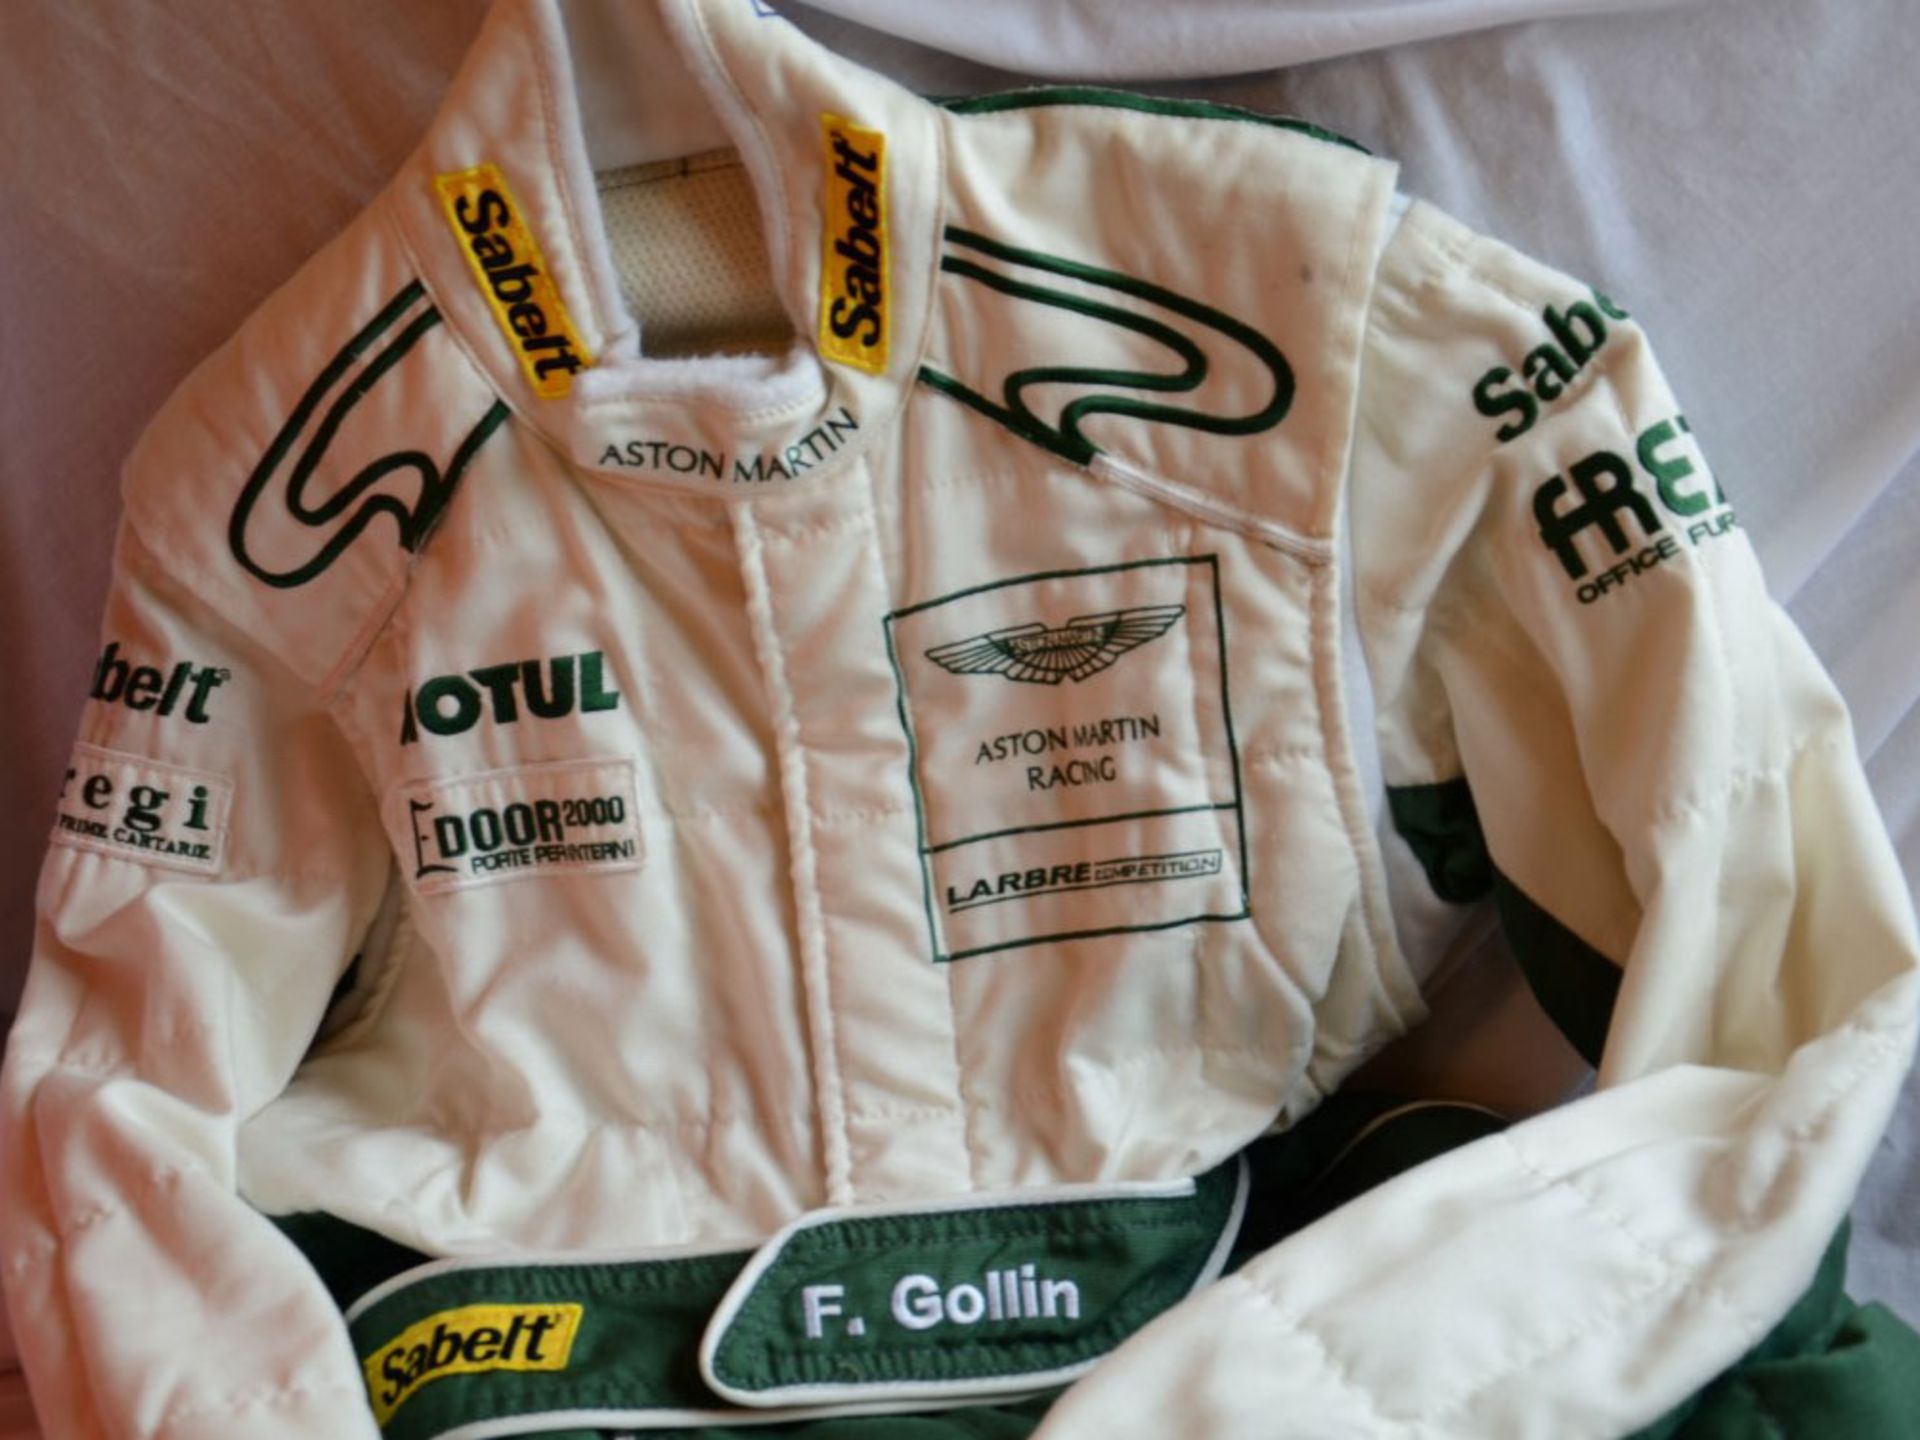 Fabrizio Gollin's Aston Martin Le Mans Race Suit